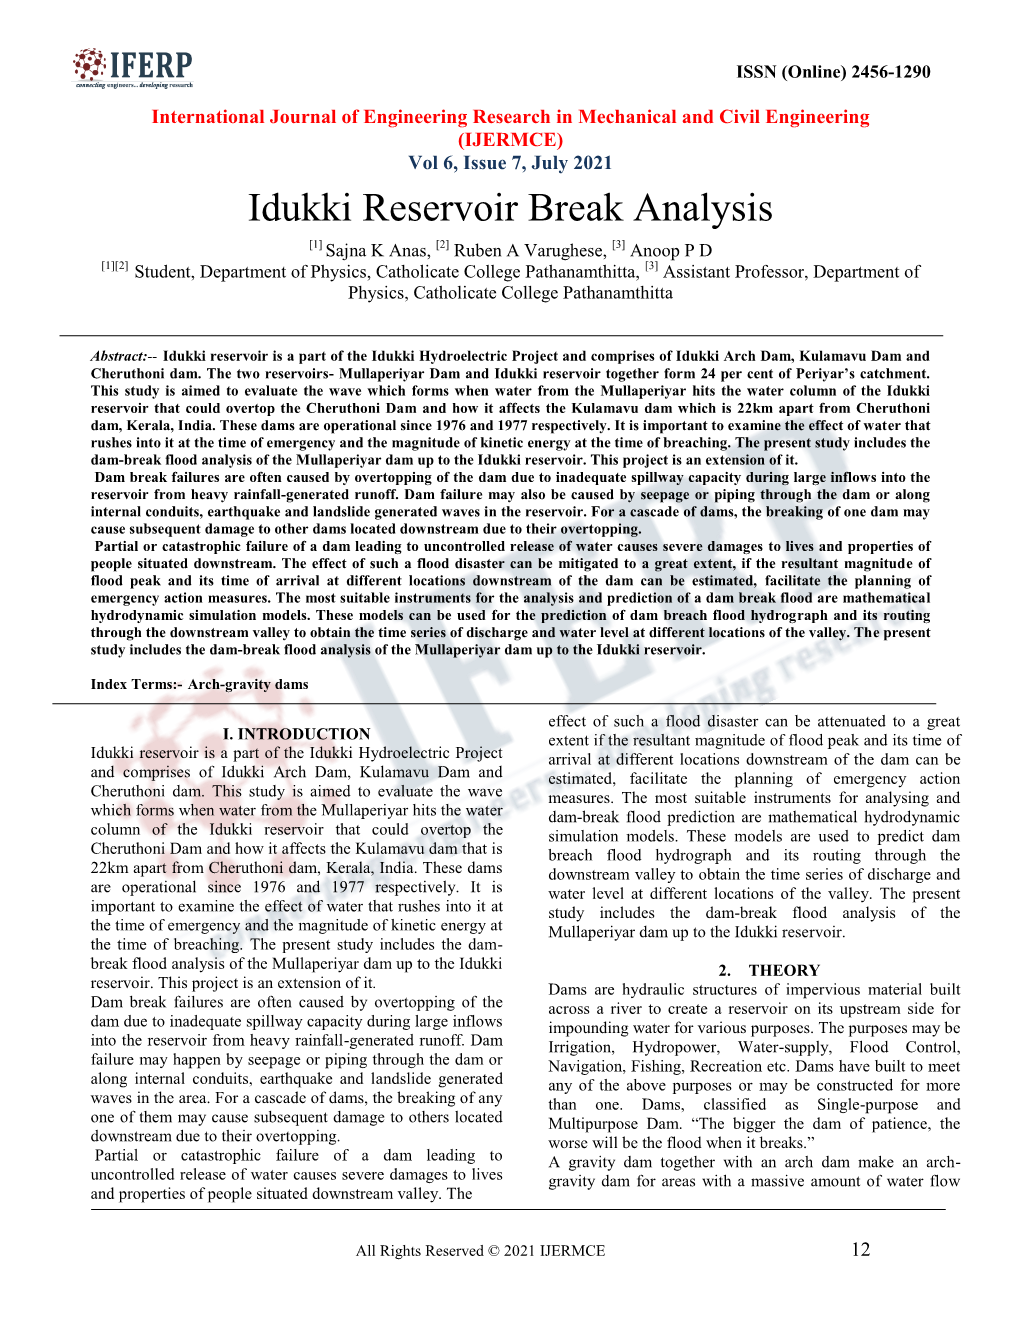 Idukki Reservoir Break Analysis